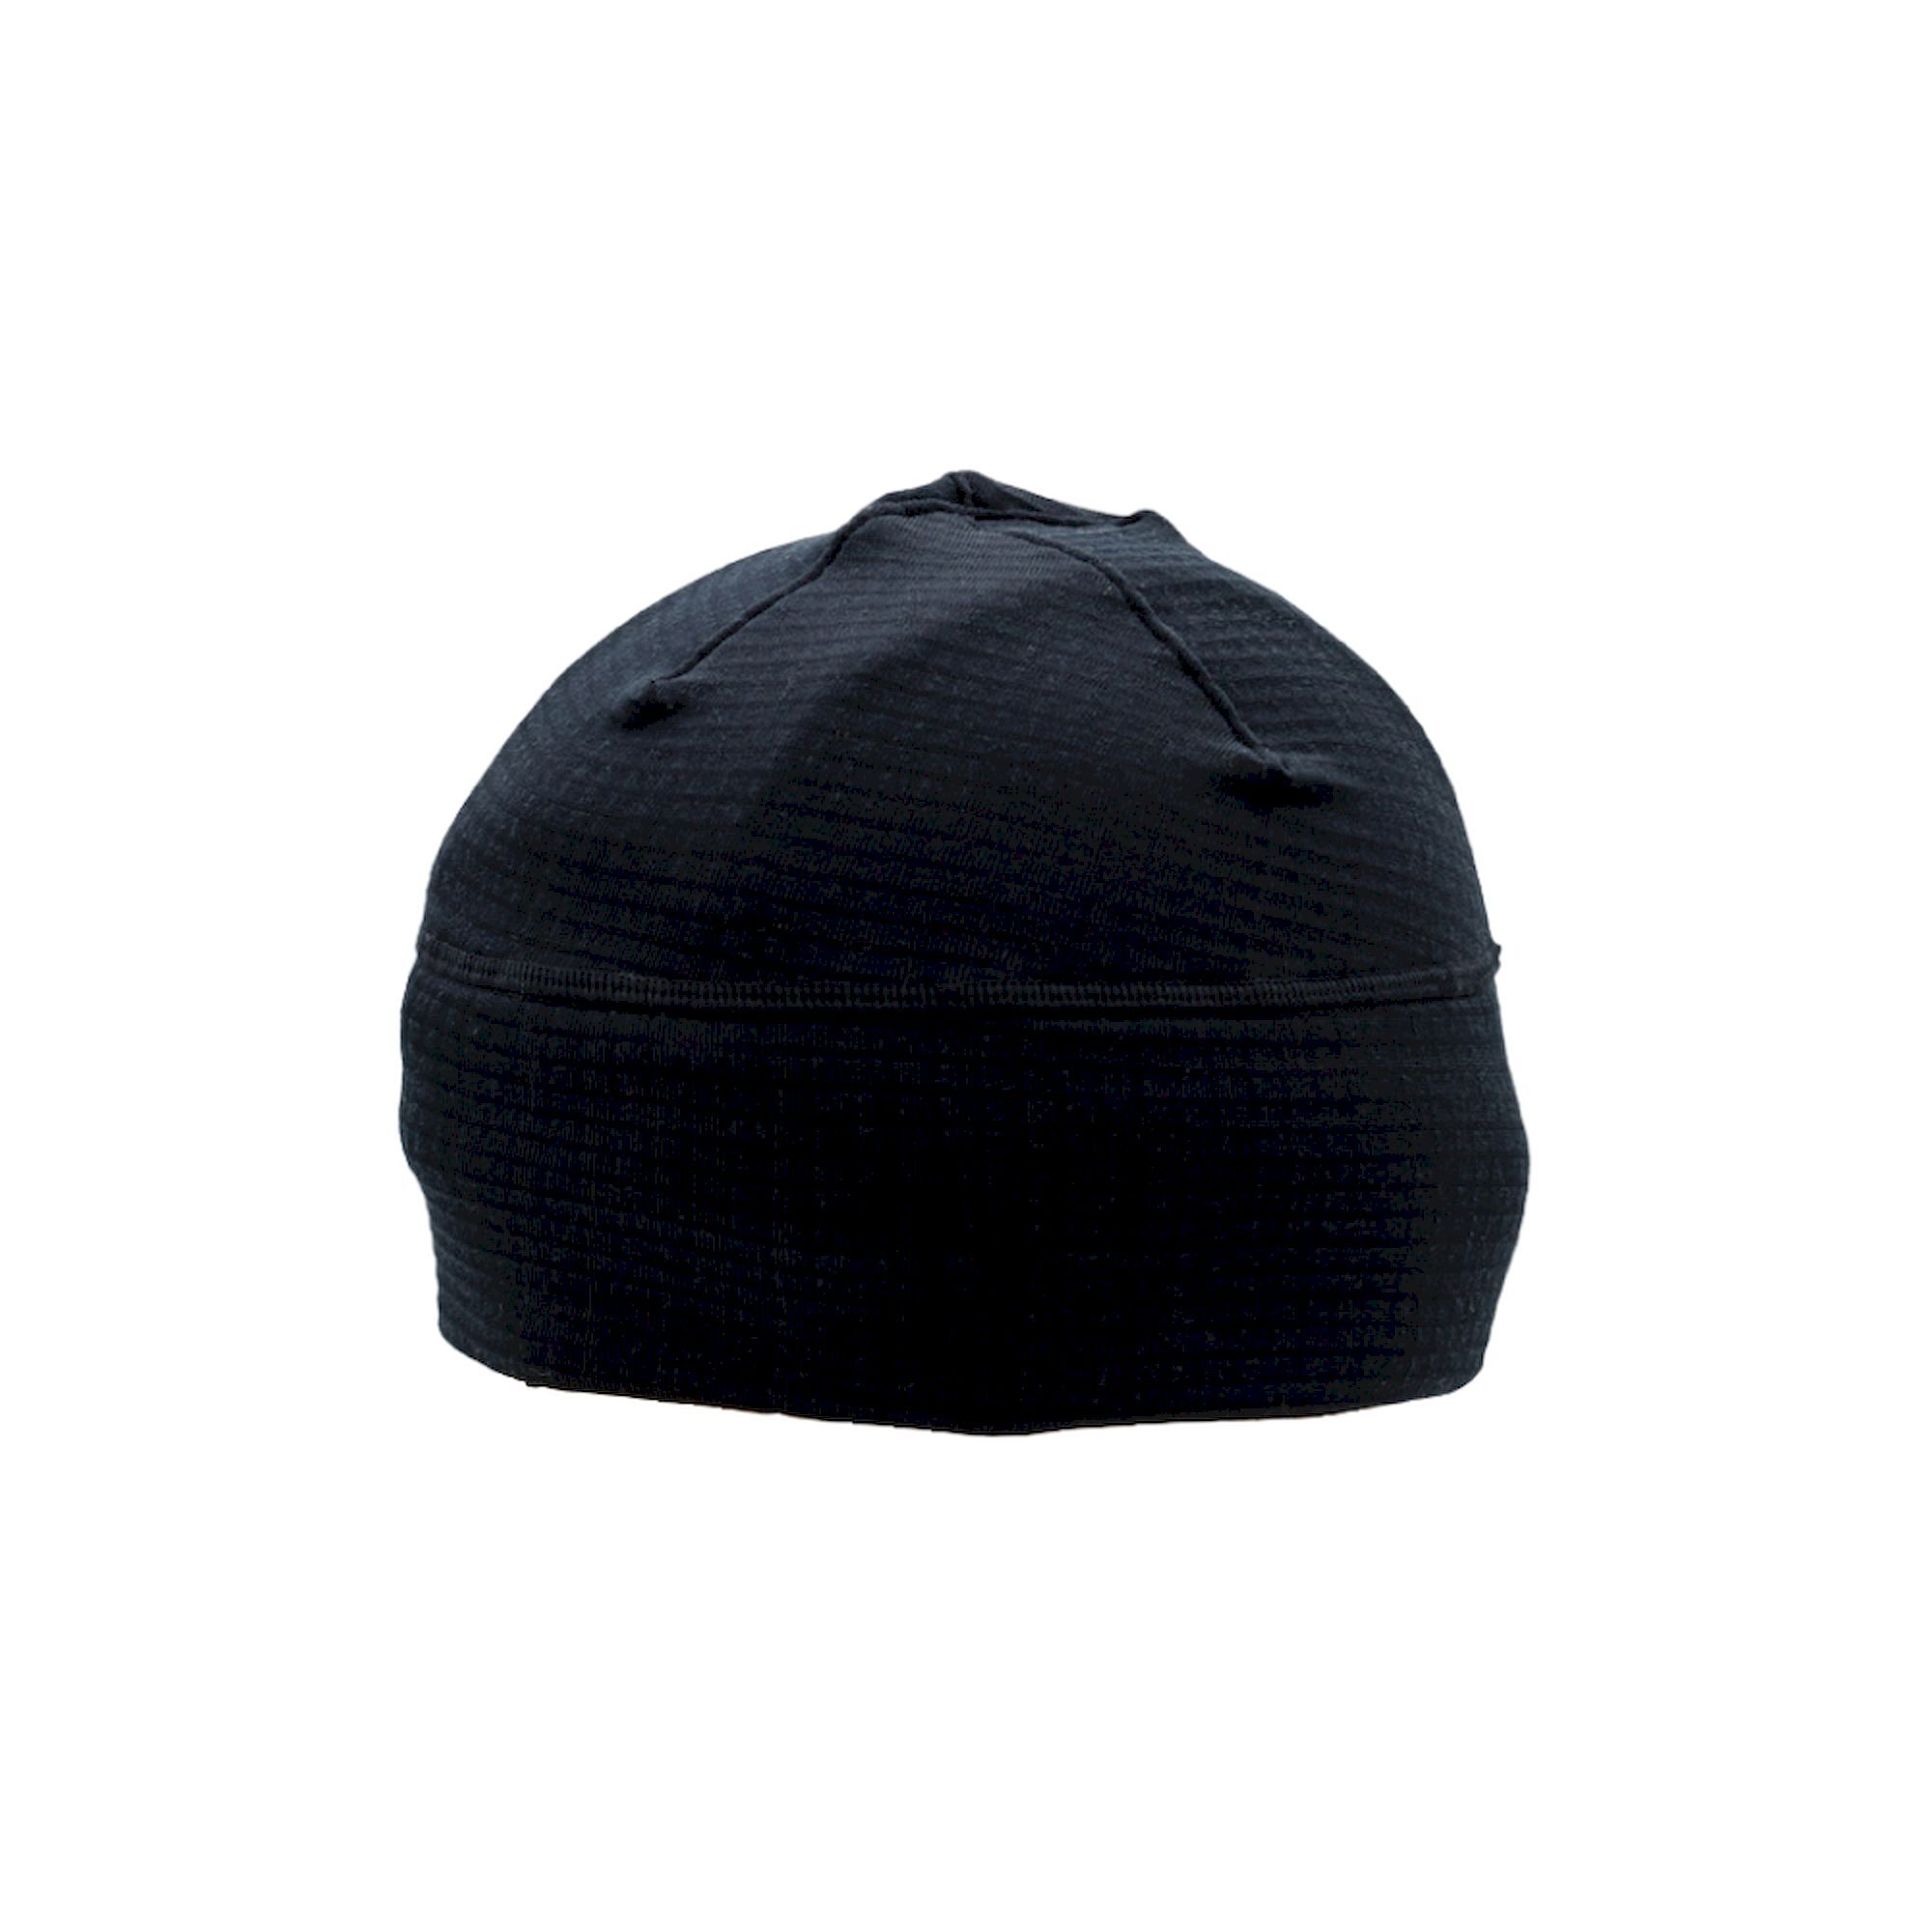 PAG Neckwear Technical Hat - Mössa